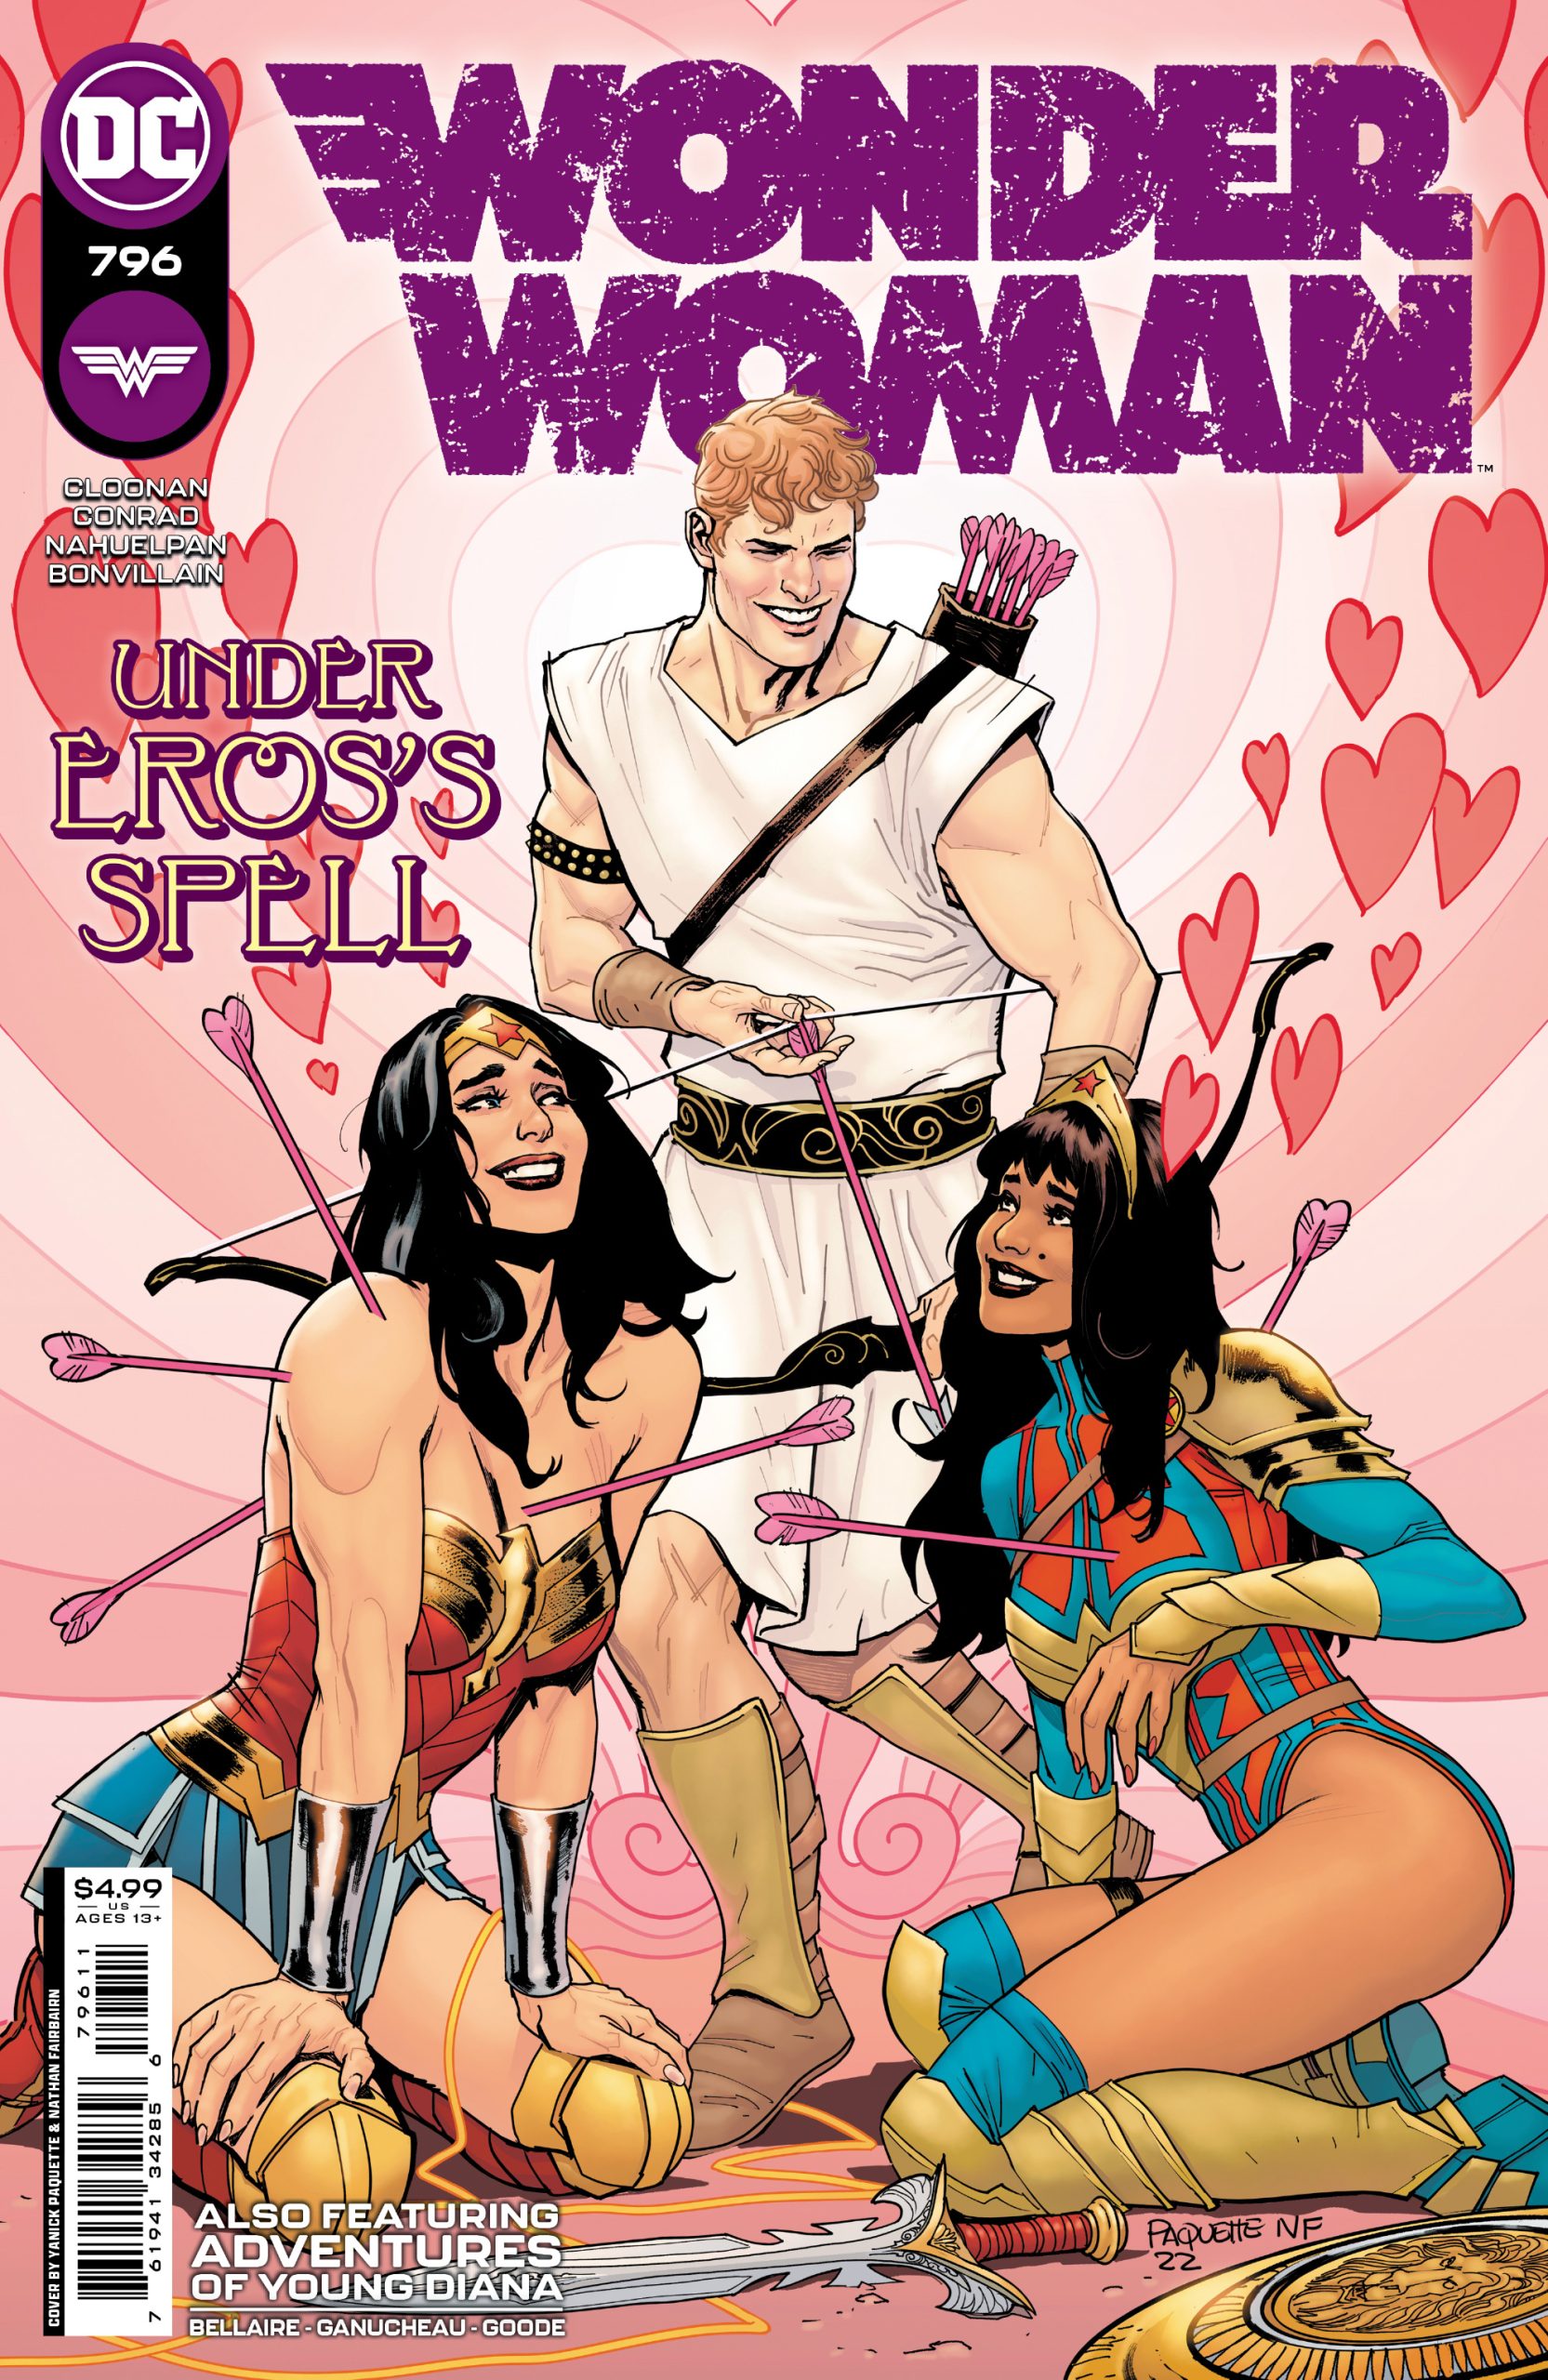 Indie Comics Review: Snowpiercer Vol. 1 - The Escape - DC Comics News